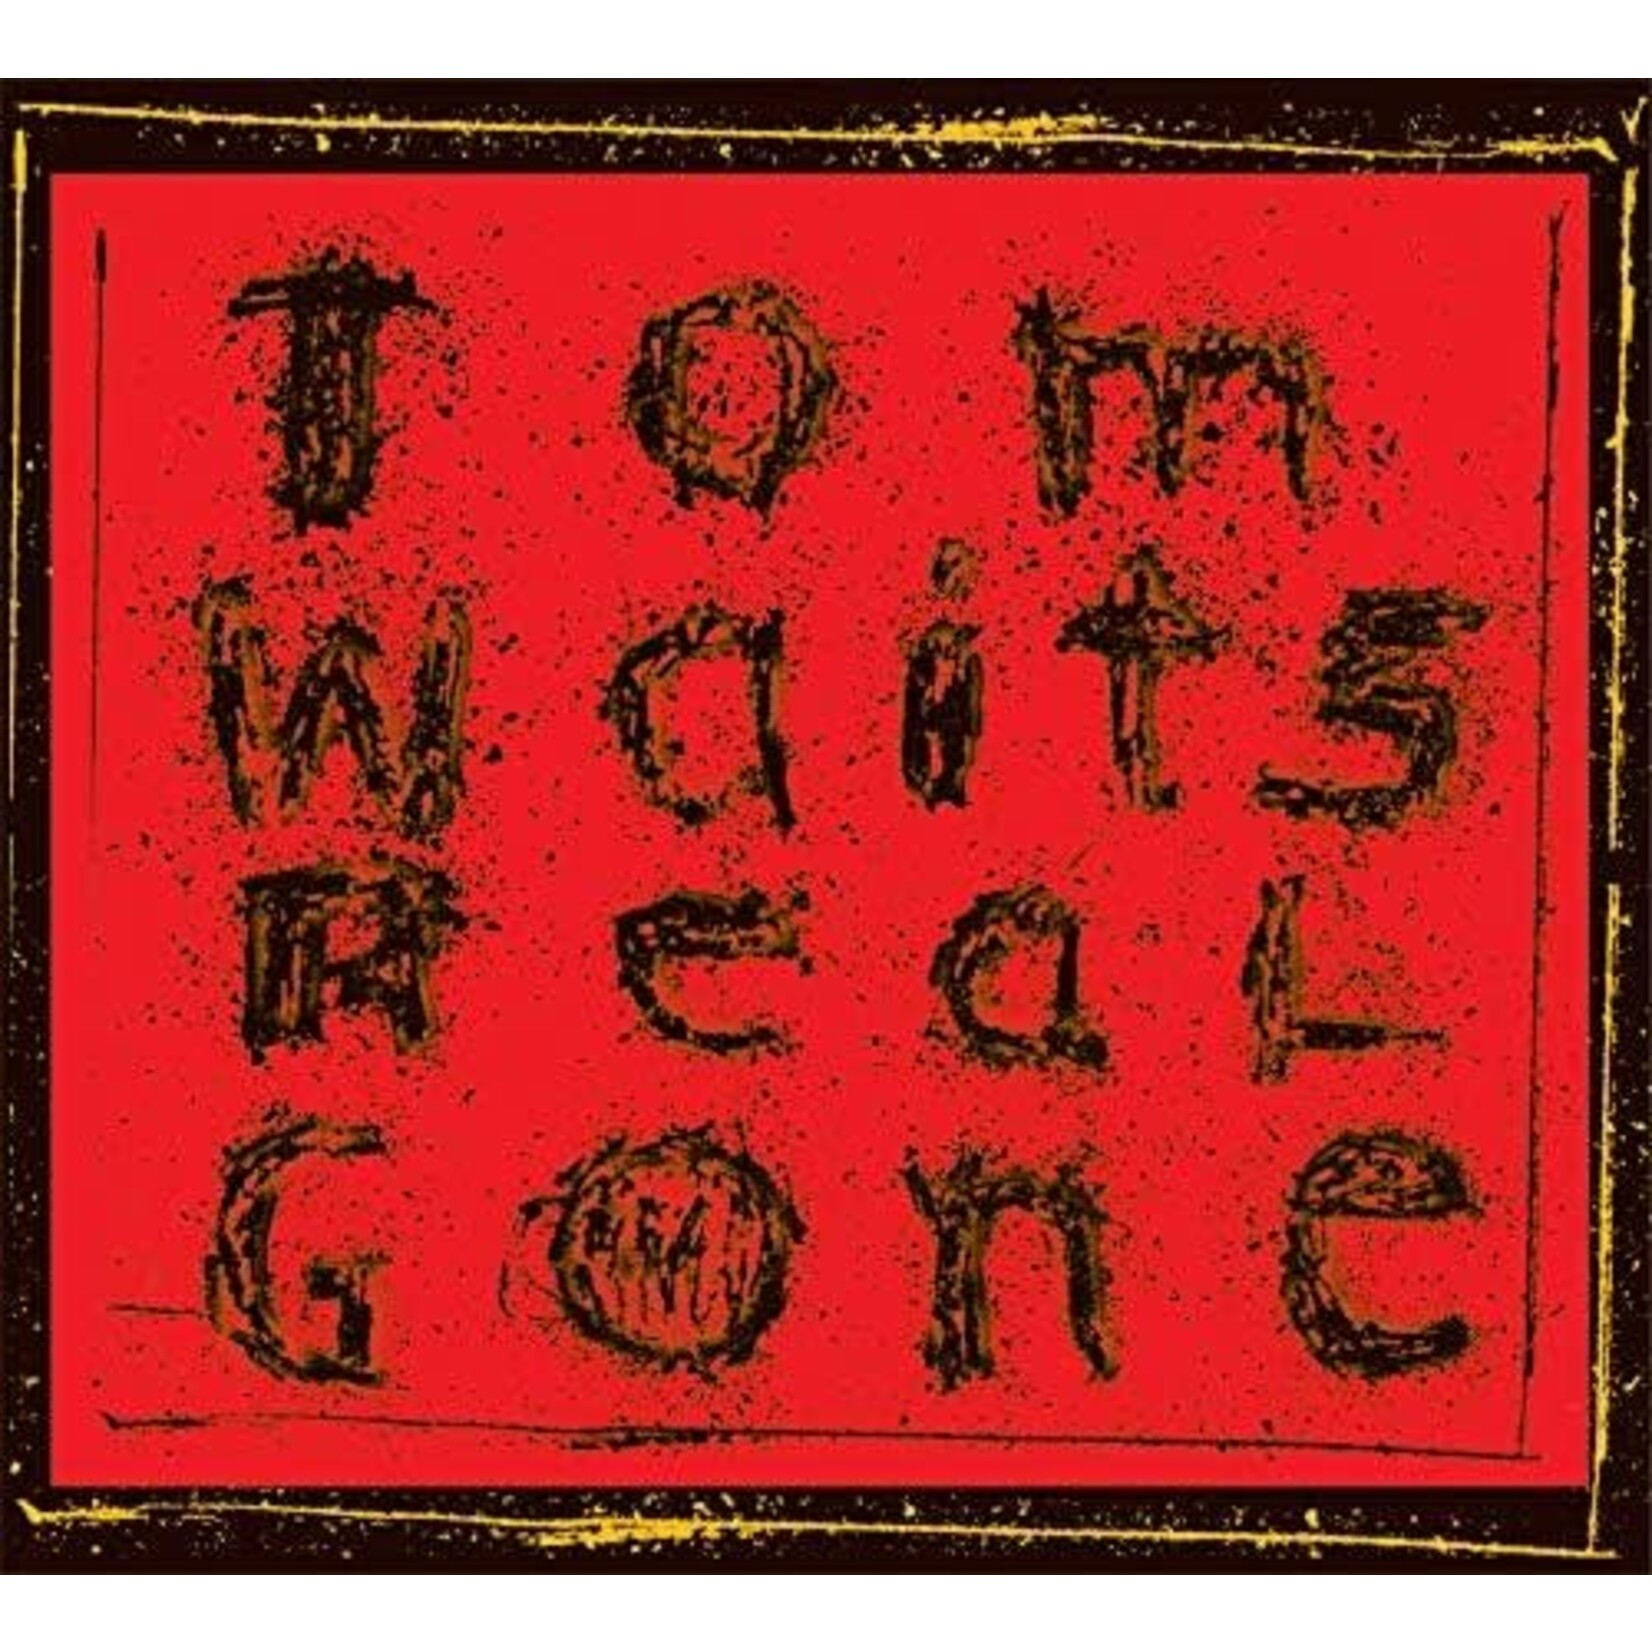 Vinyl Tom Waits - Real Gone